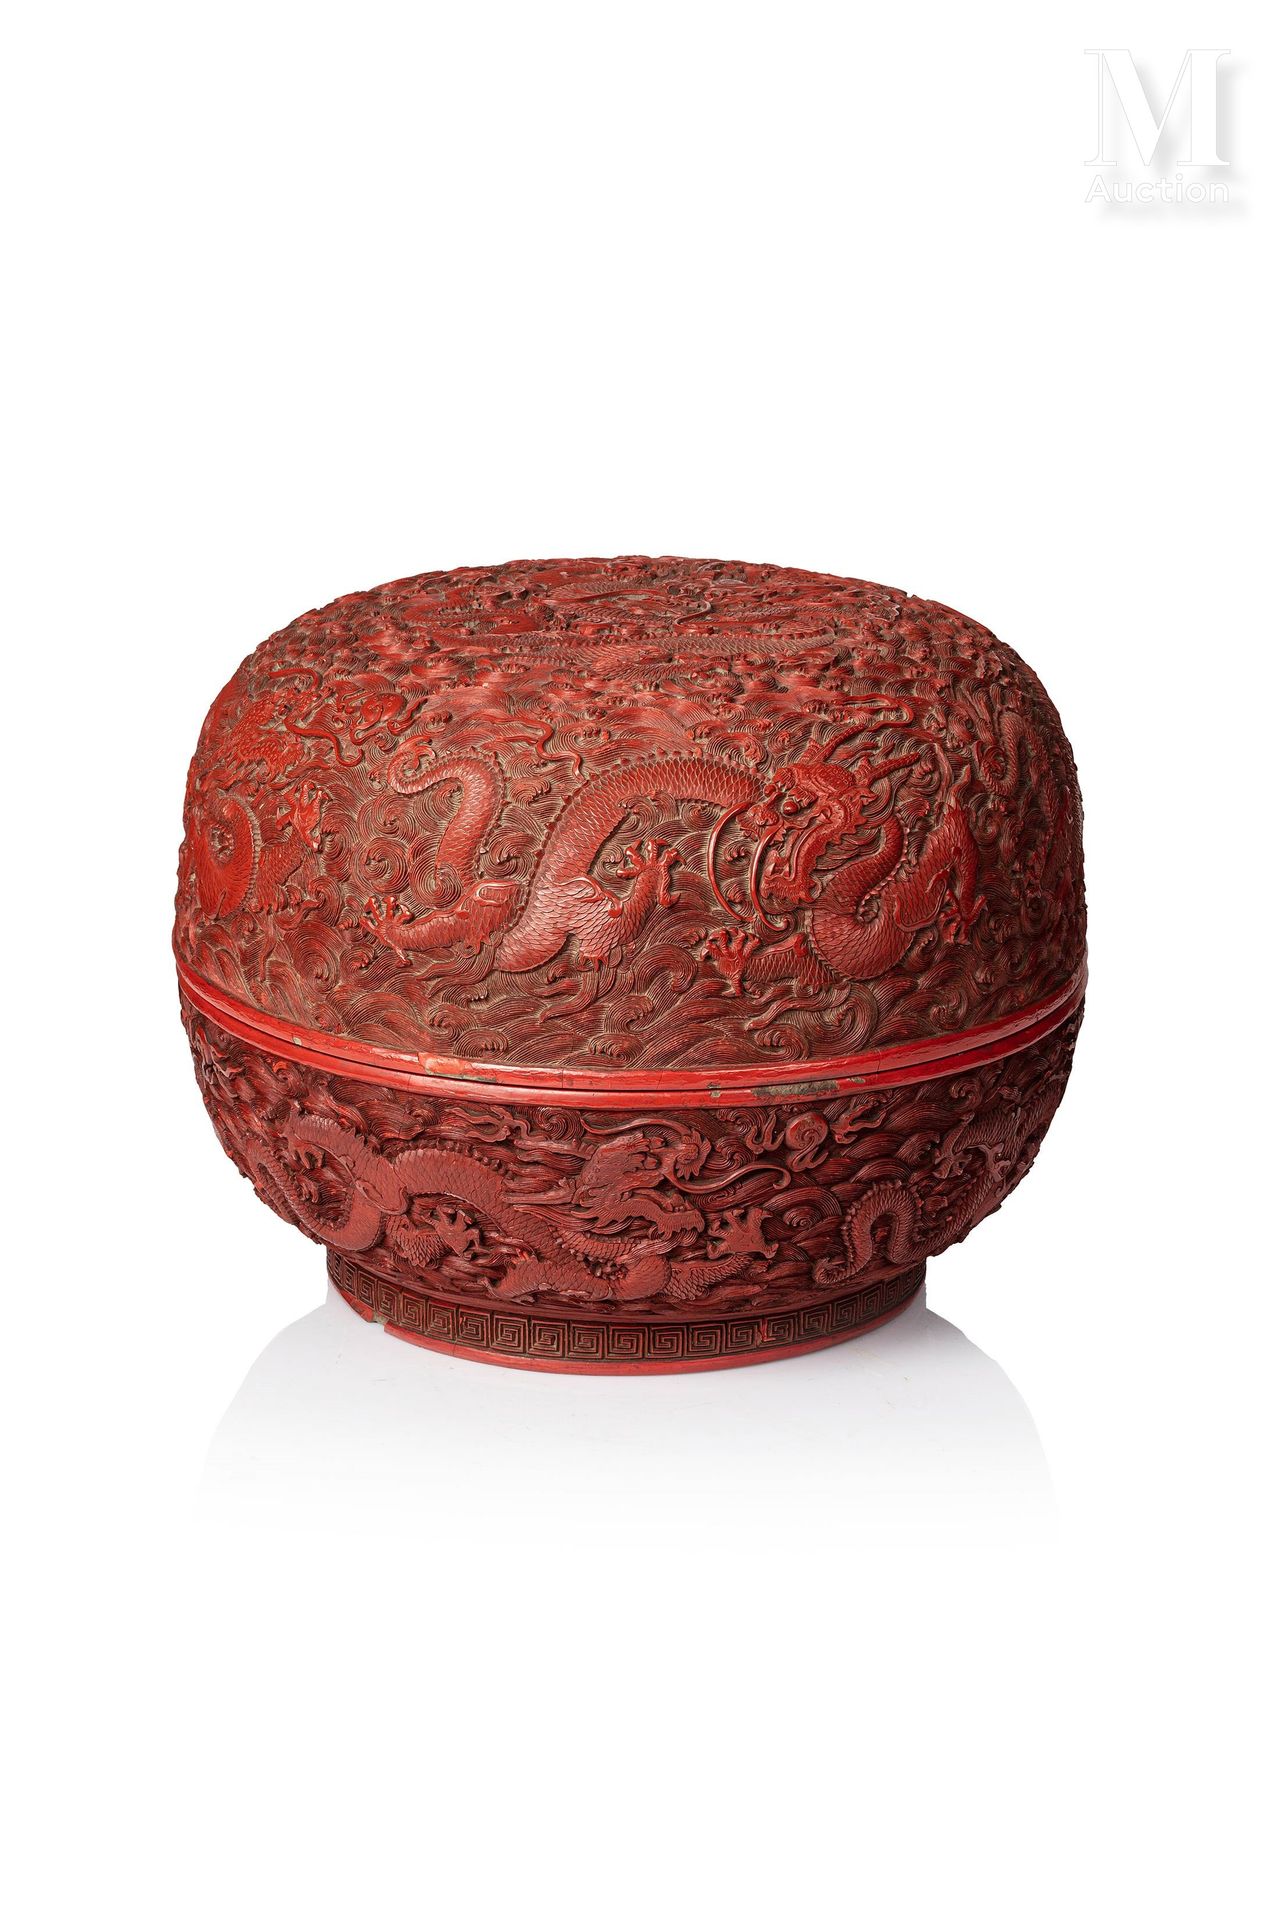 CHINE, XVIIIe SIÈCLE 
Importante boite en laque cinabre sculptée de forme circul&hellip;